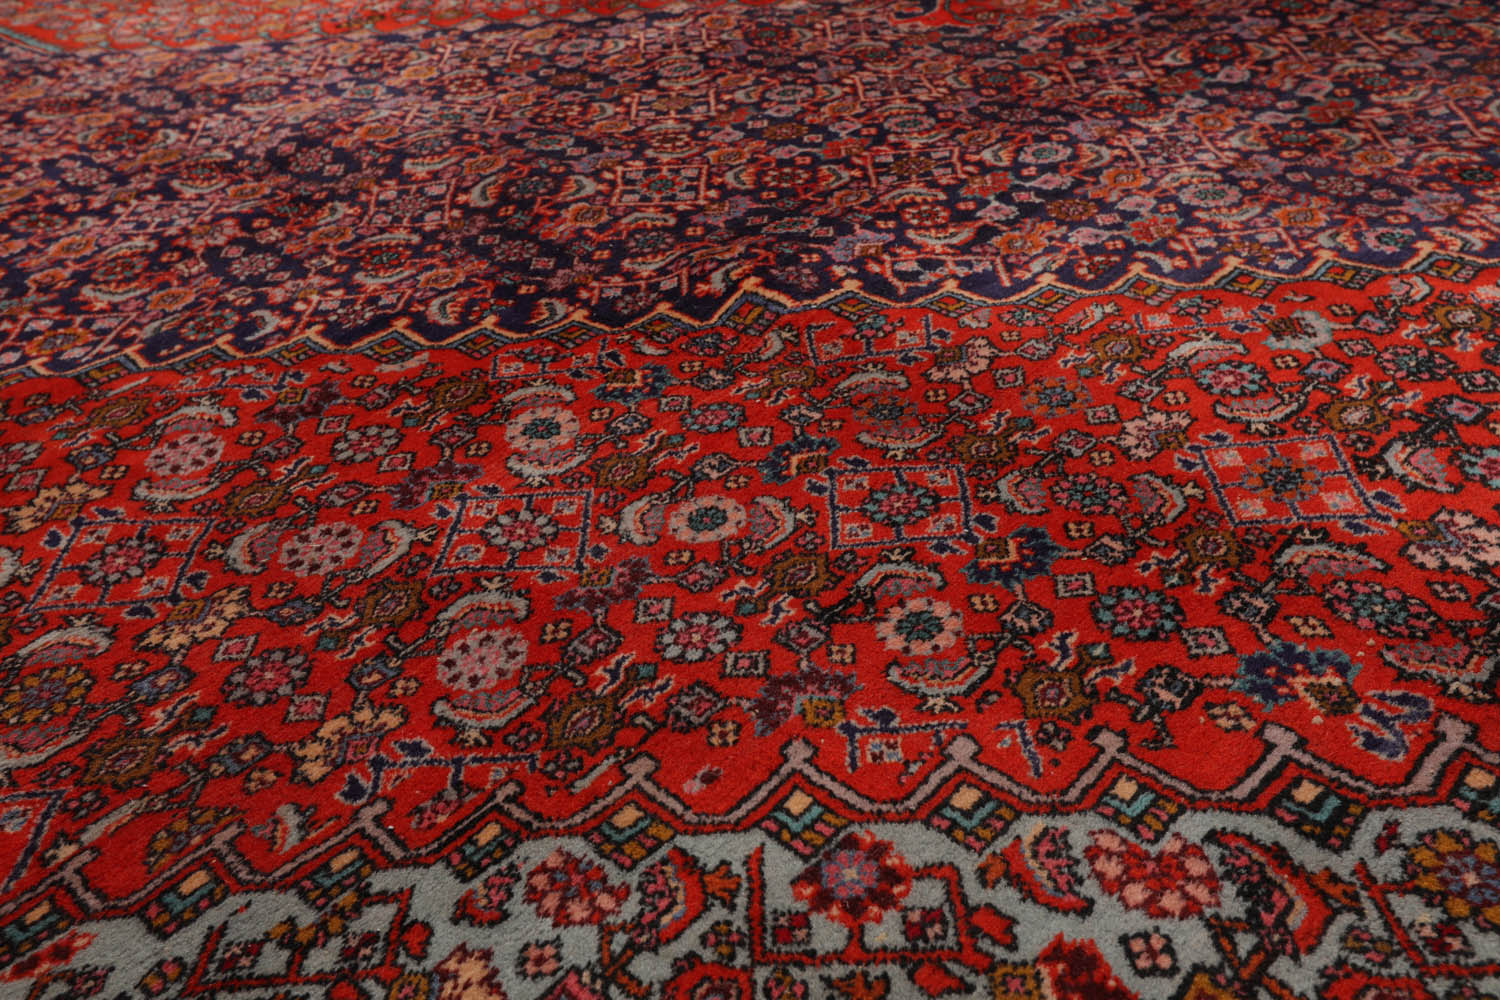 Lubien 10x14 Hand Knotted 100% Wool Vintage Bidjar Traditional Oriental Area Rug Navy, Orange Color